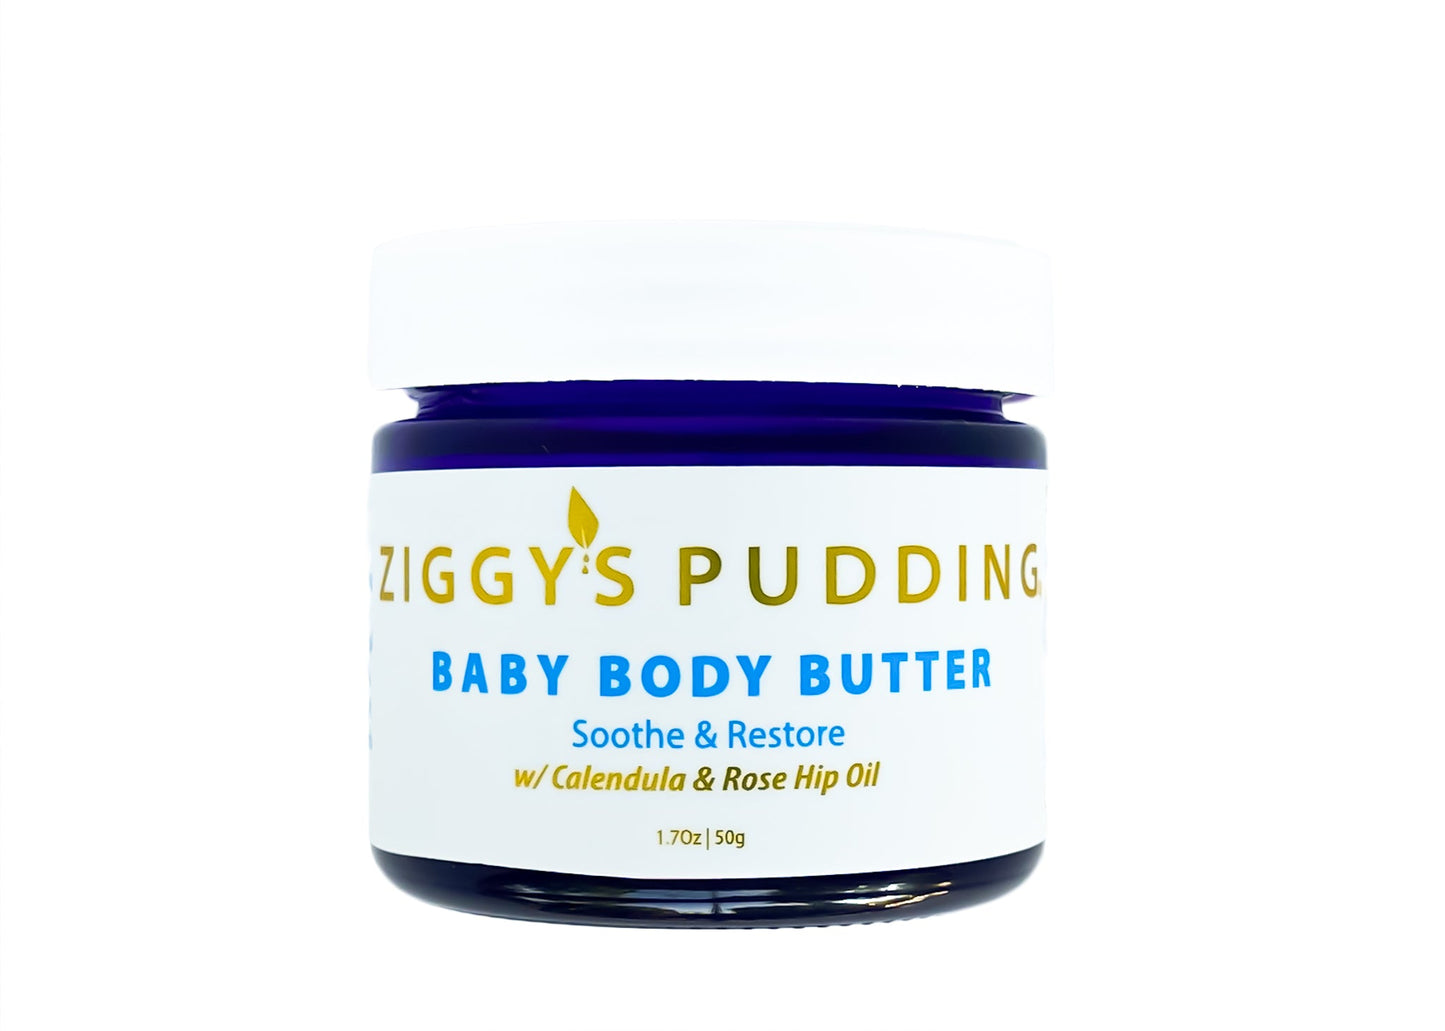 Baby Body Butter - Ziggy's Pudding